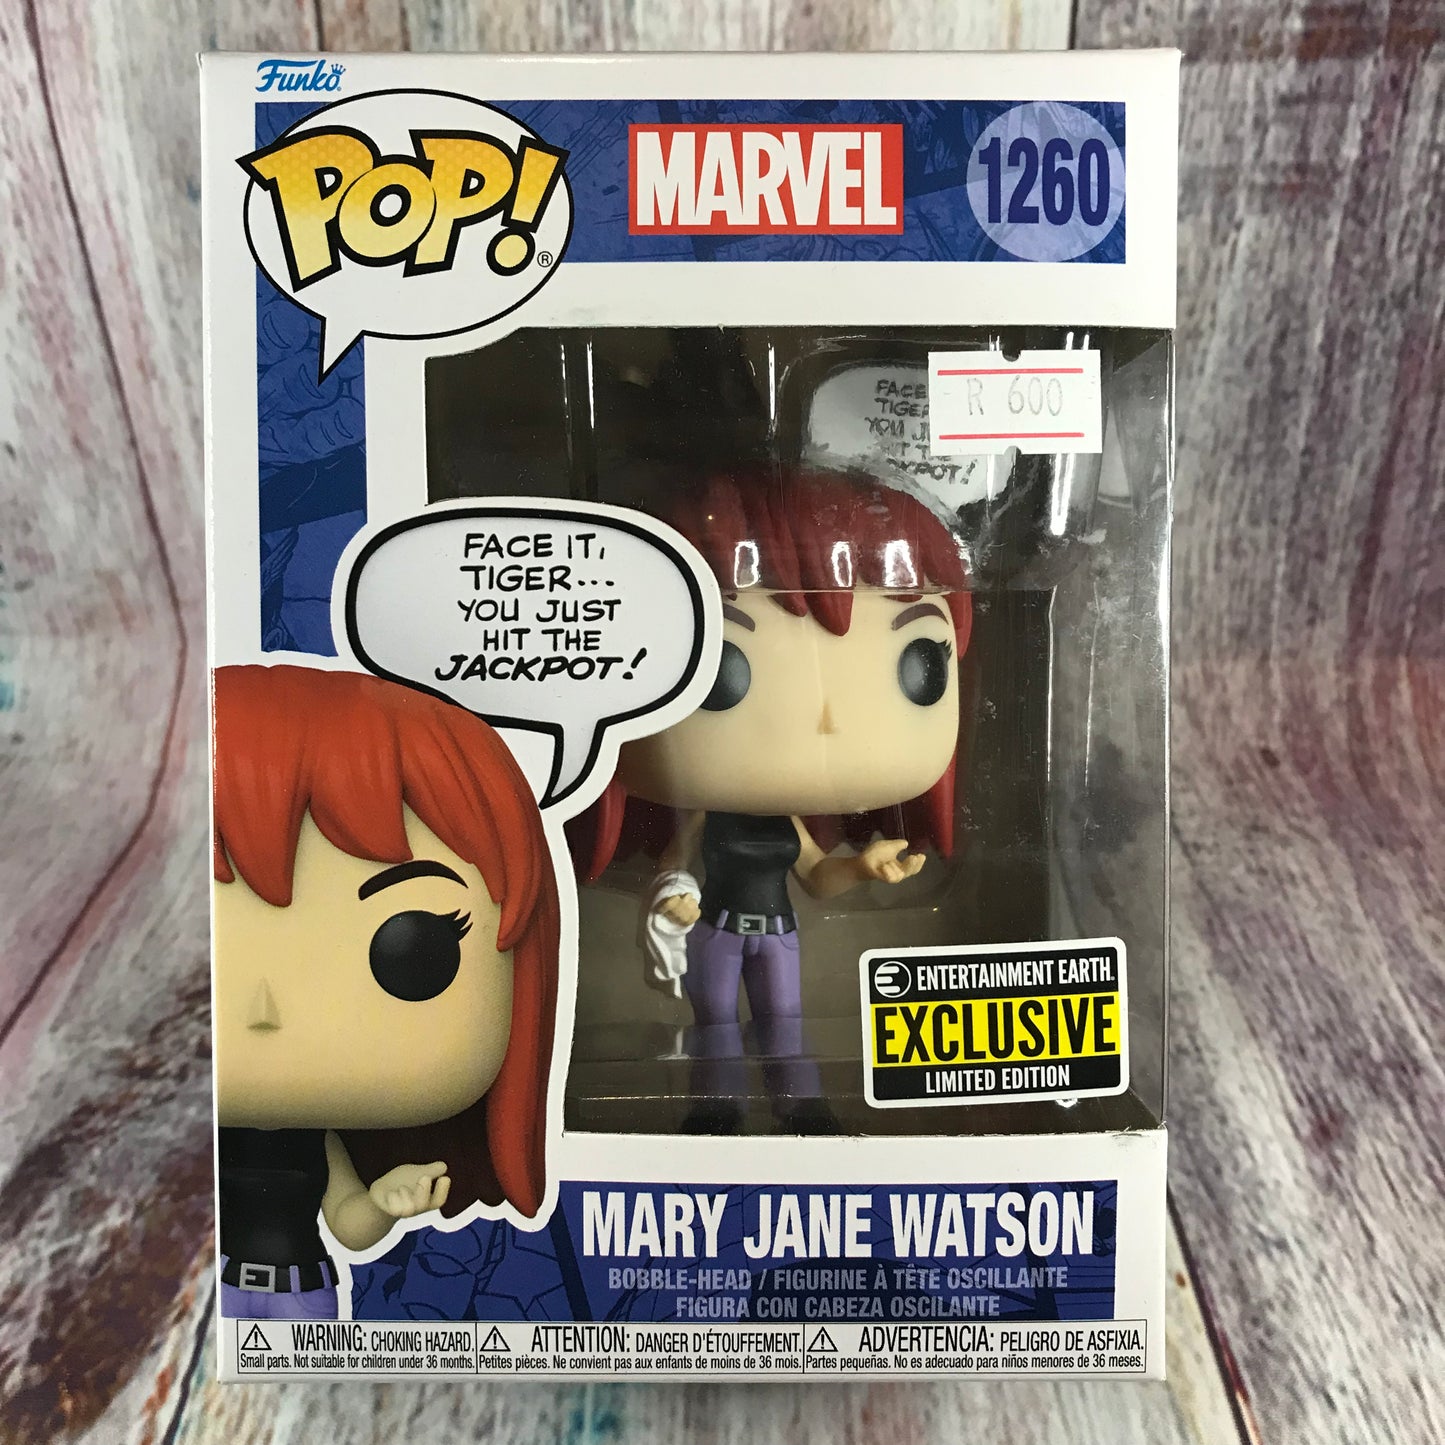 1260 Marvel, Mary Jane Watson (Entertainment Earth)